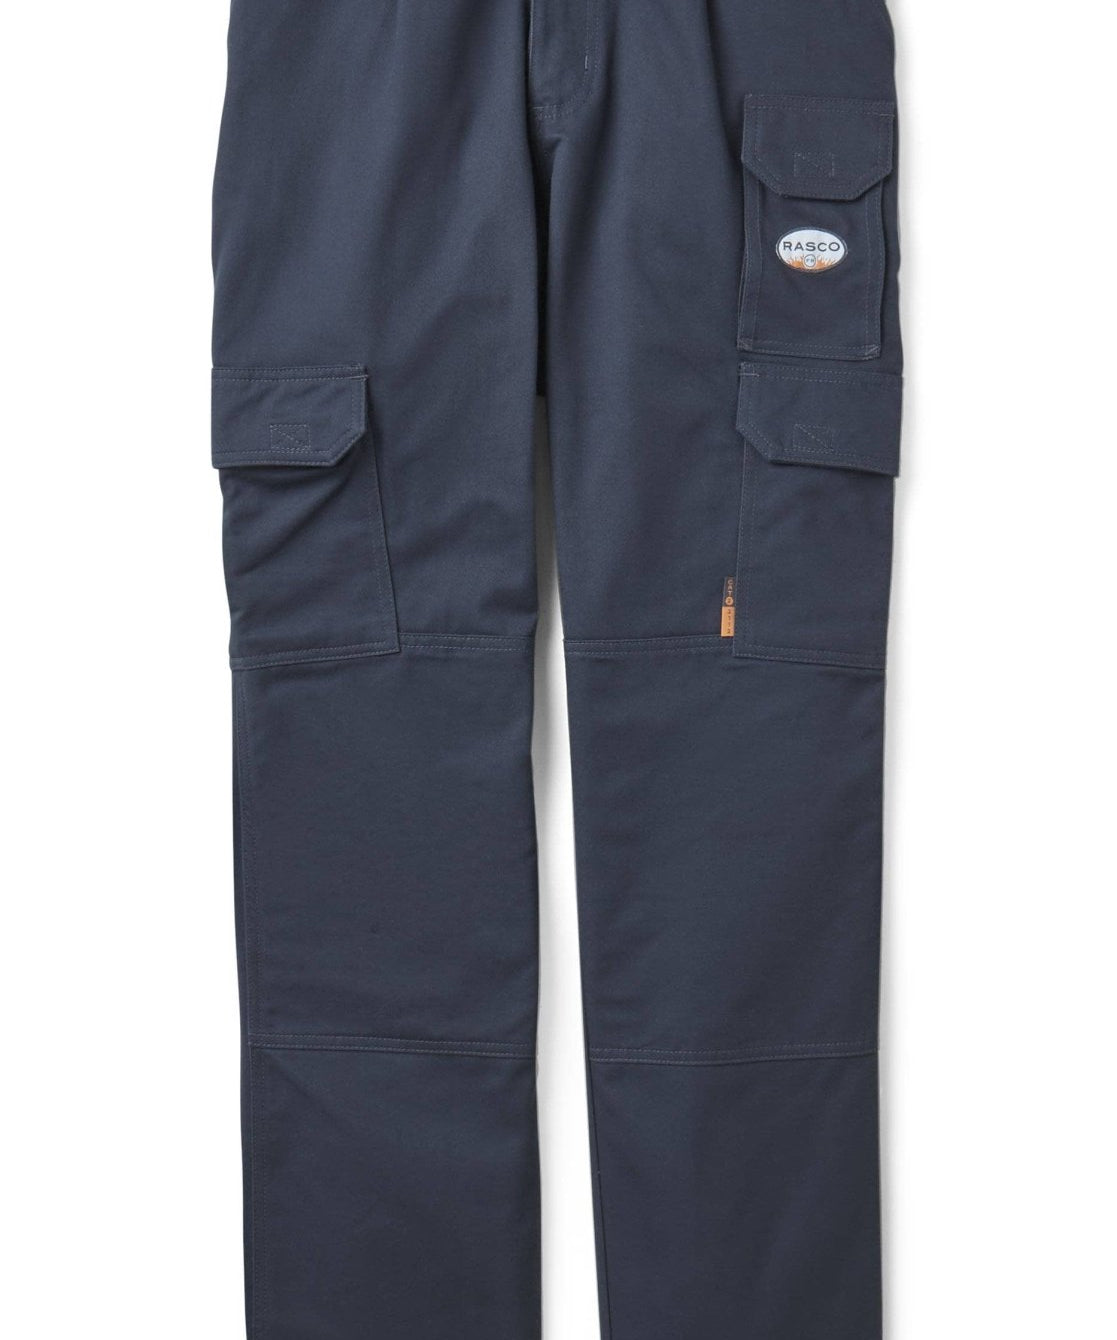 FR Field Pants - Charcoal - Rasco FR